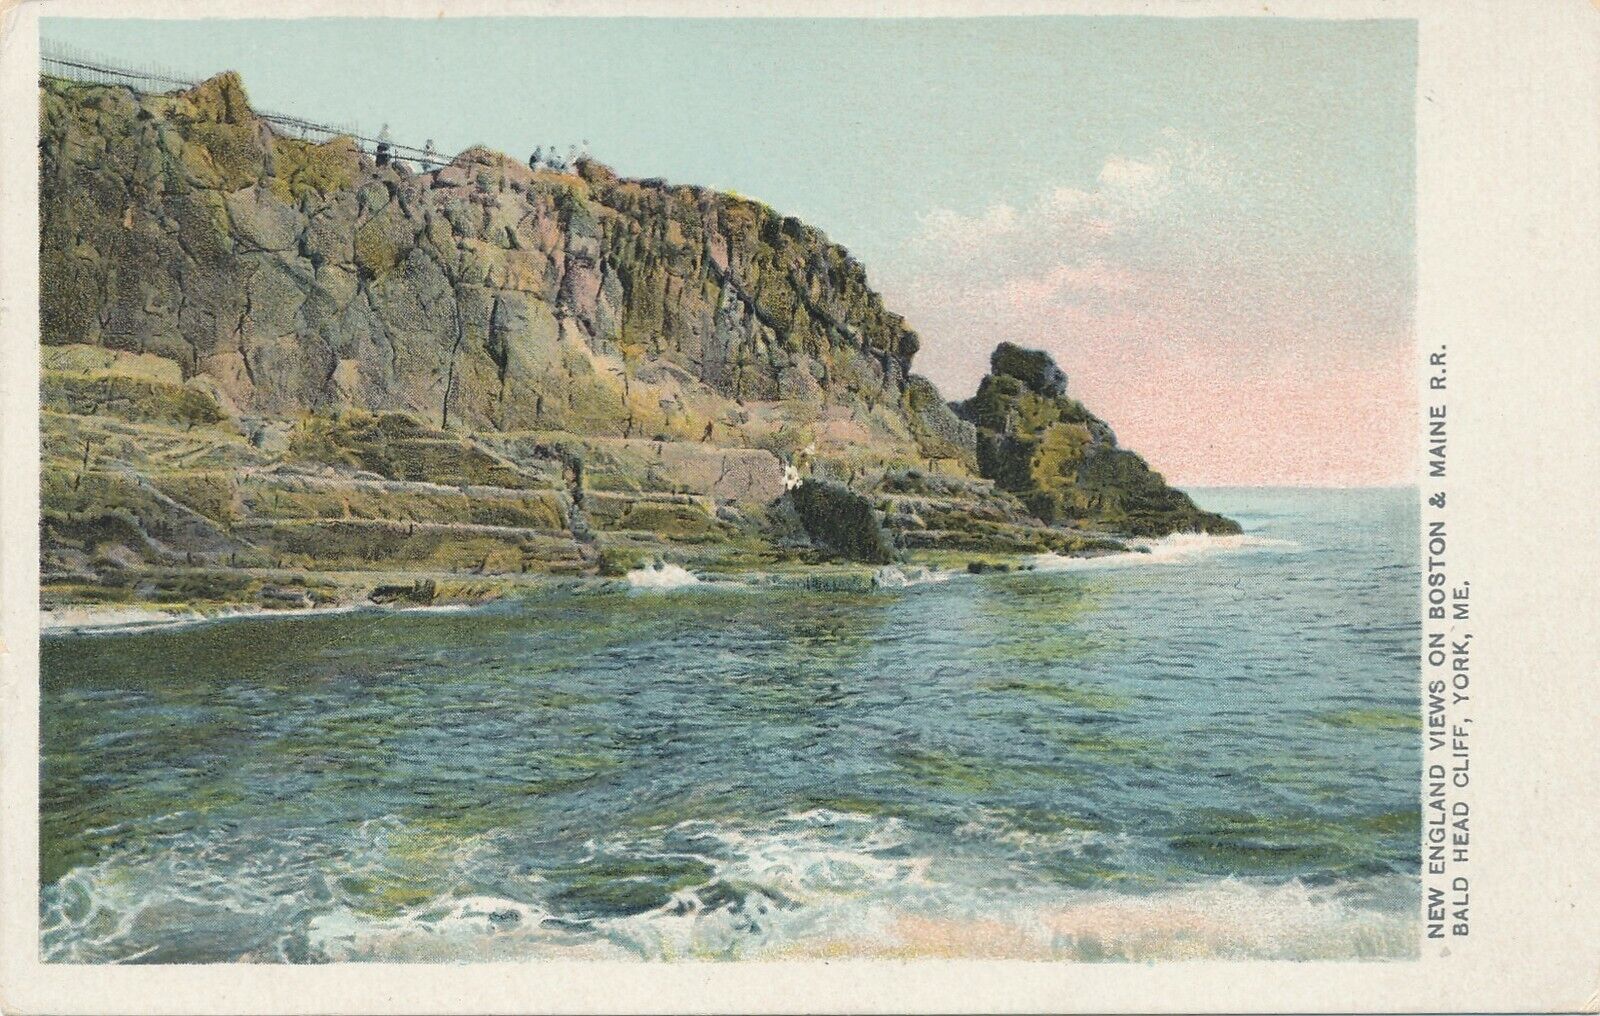 YORK ME – Bald Head Cliff – udb (pre 1908)